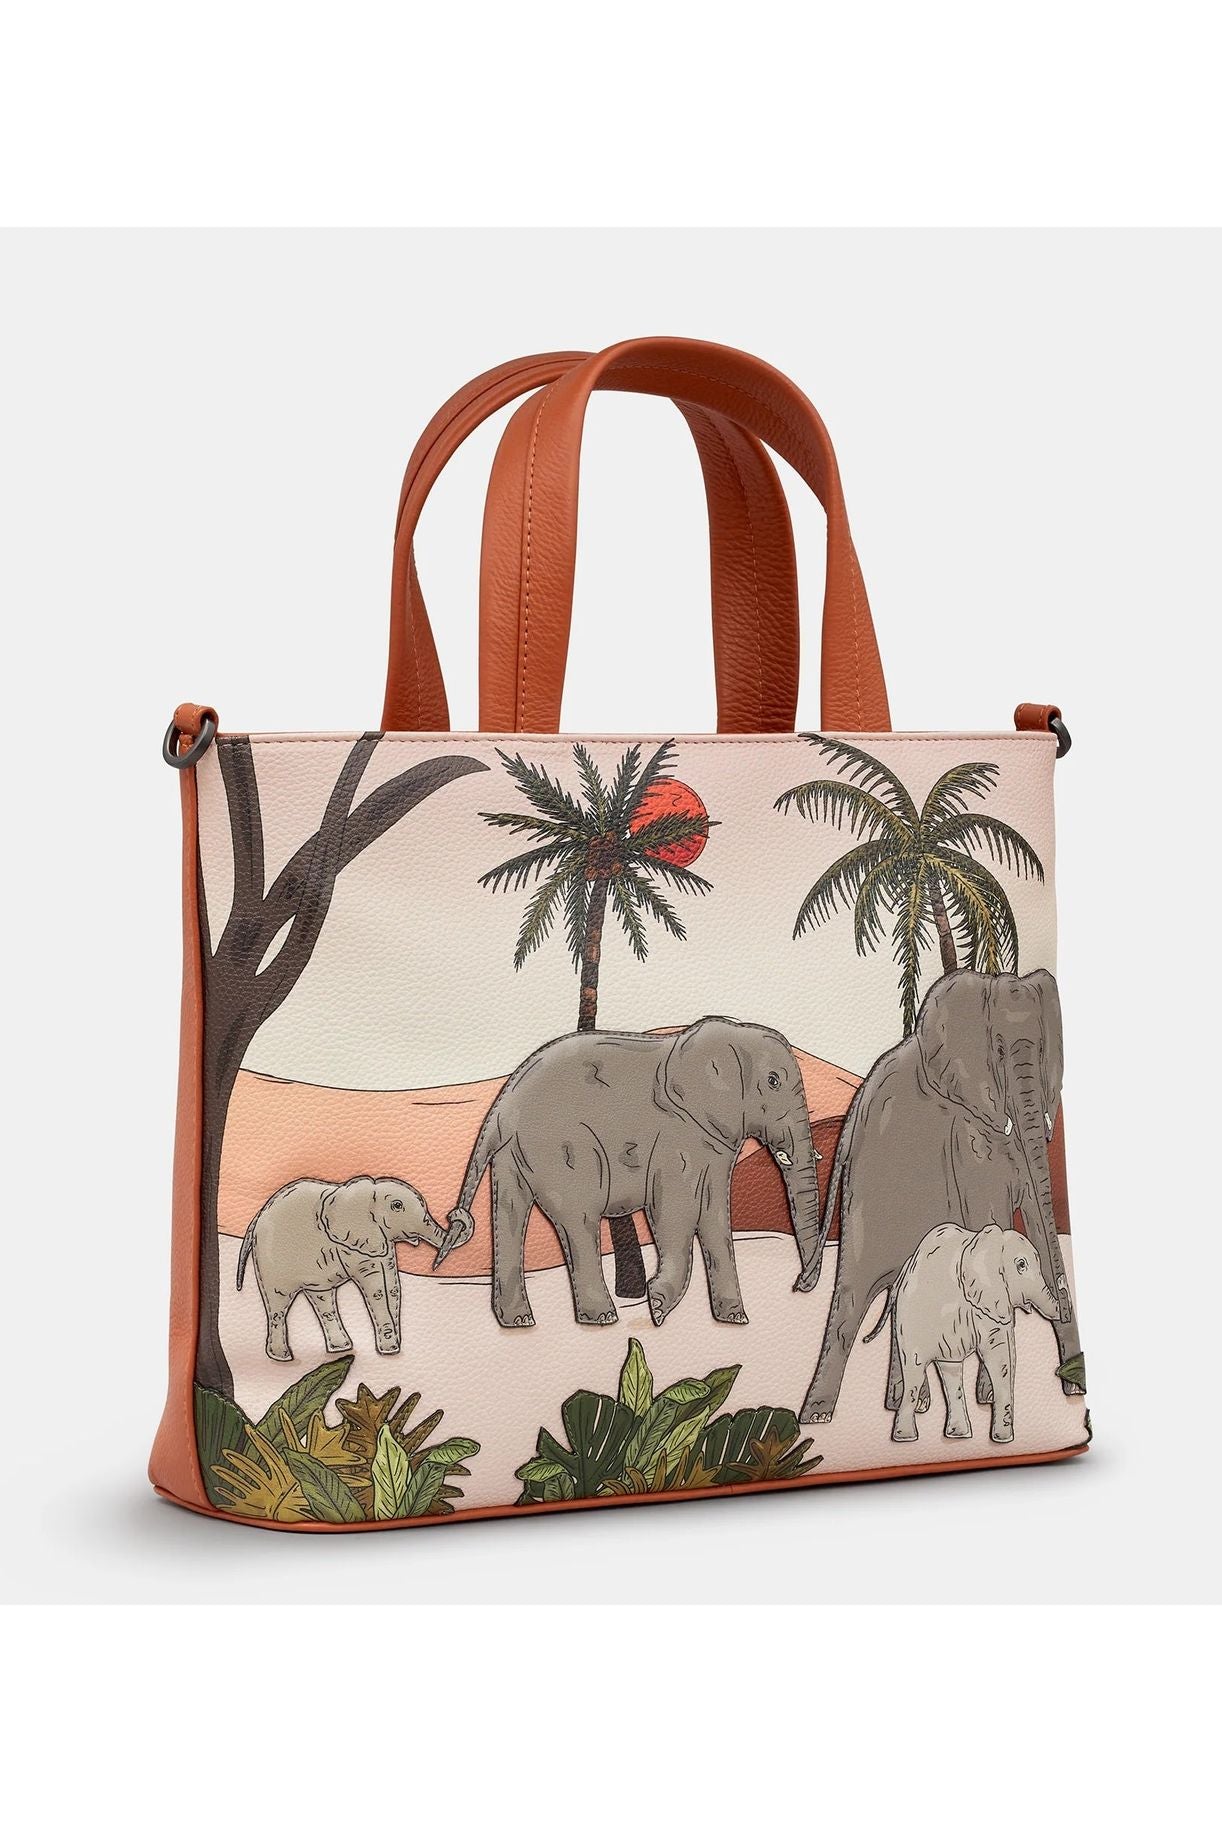 Yoshi Elephant Parade Multi way Grab Handbag